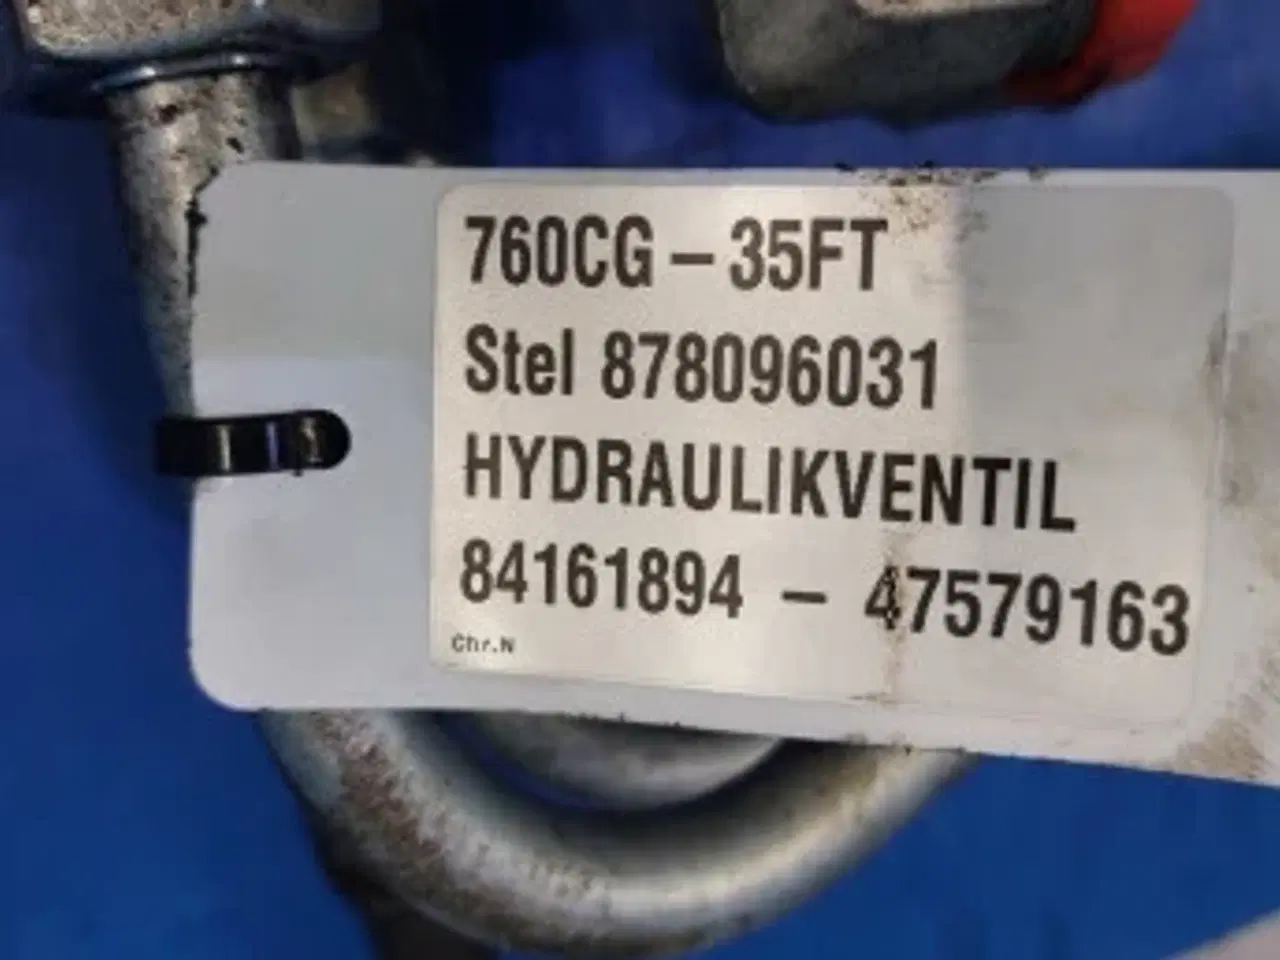 Billede 2 - New Holland 760CG-35FT Hydraulik Ventil  878096031 